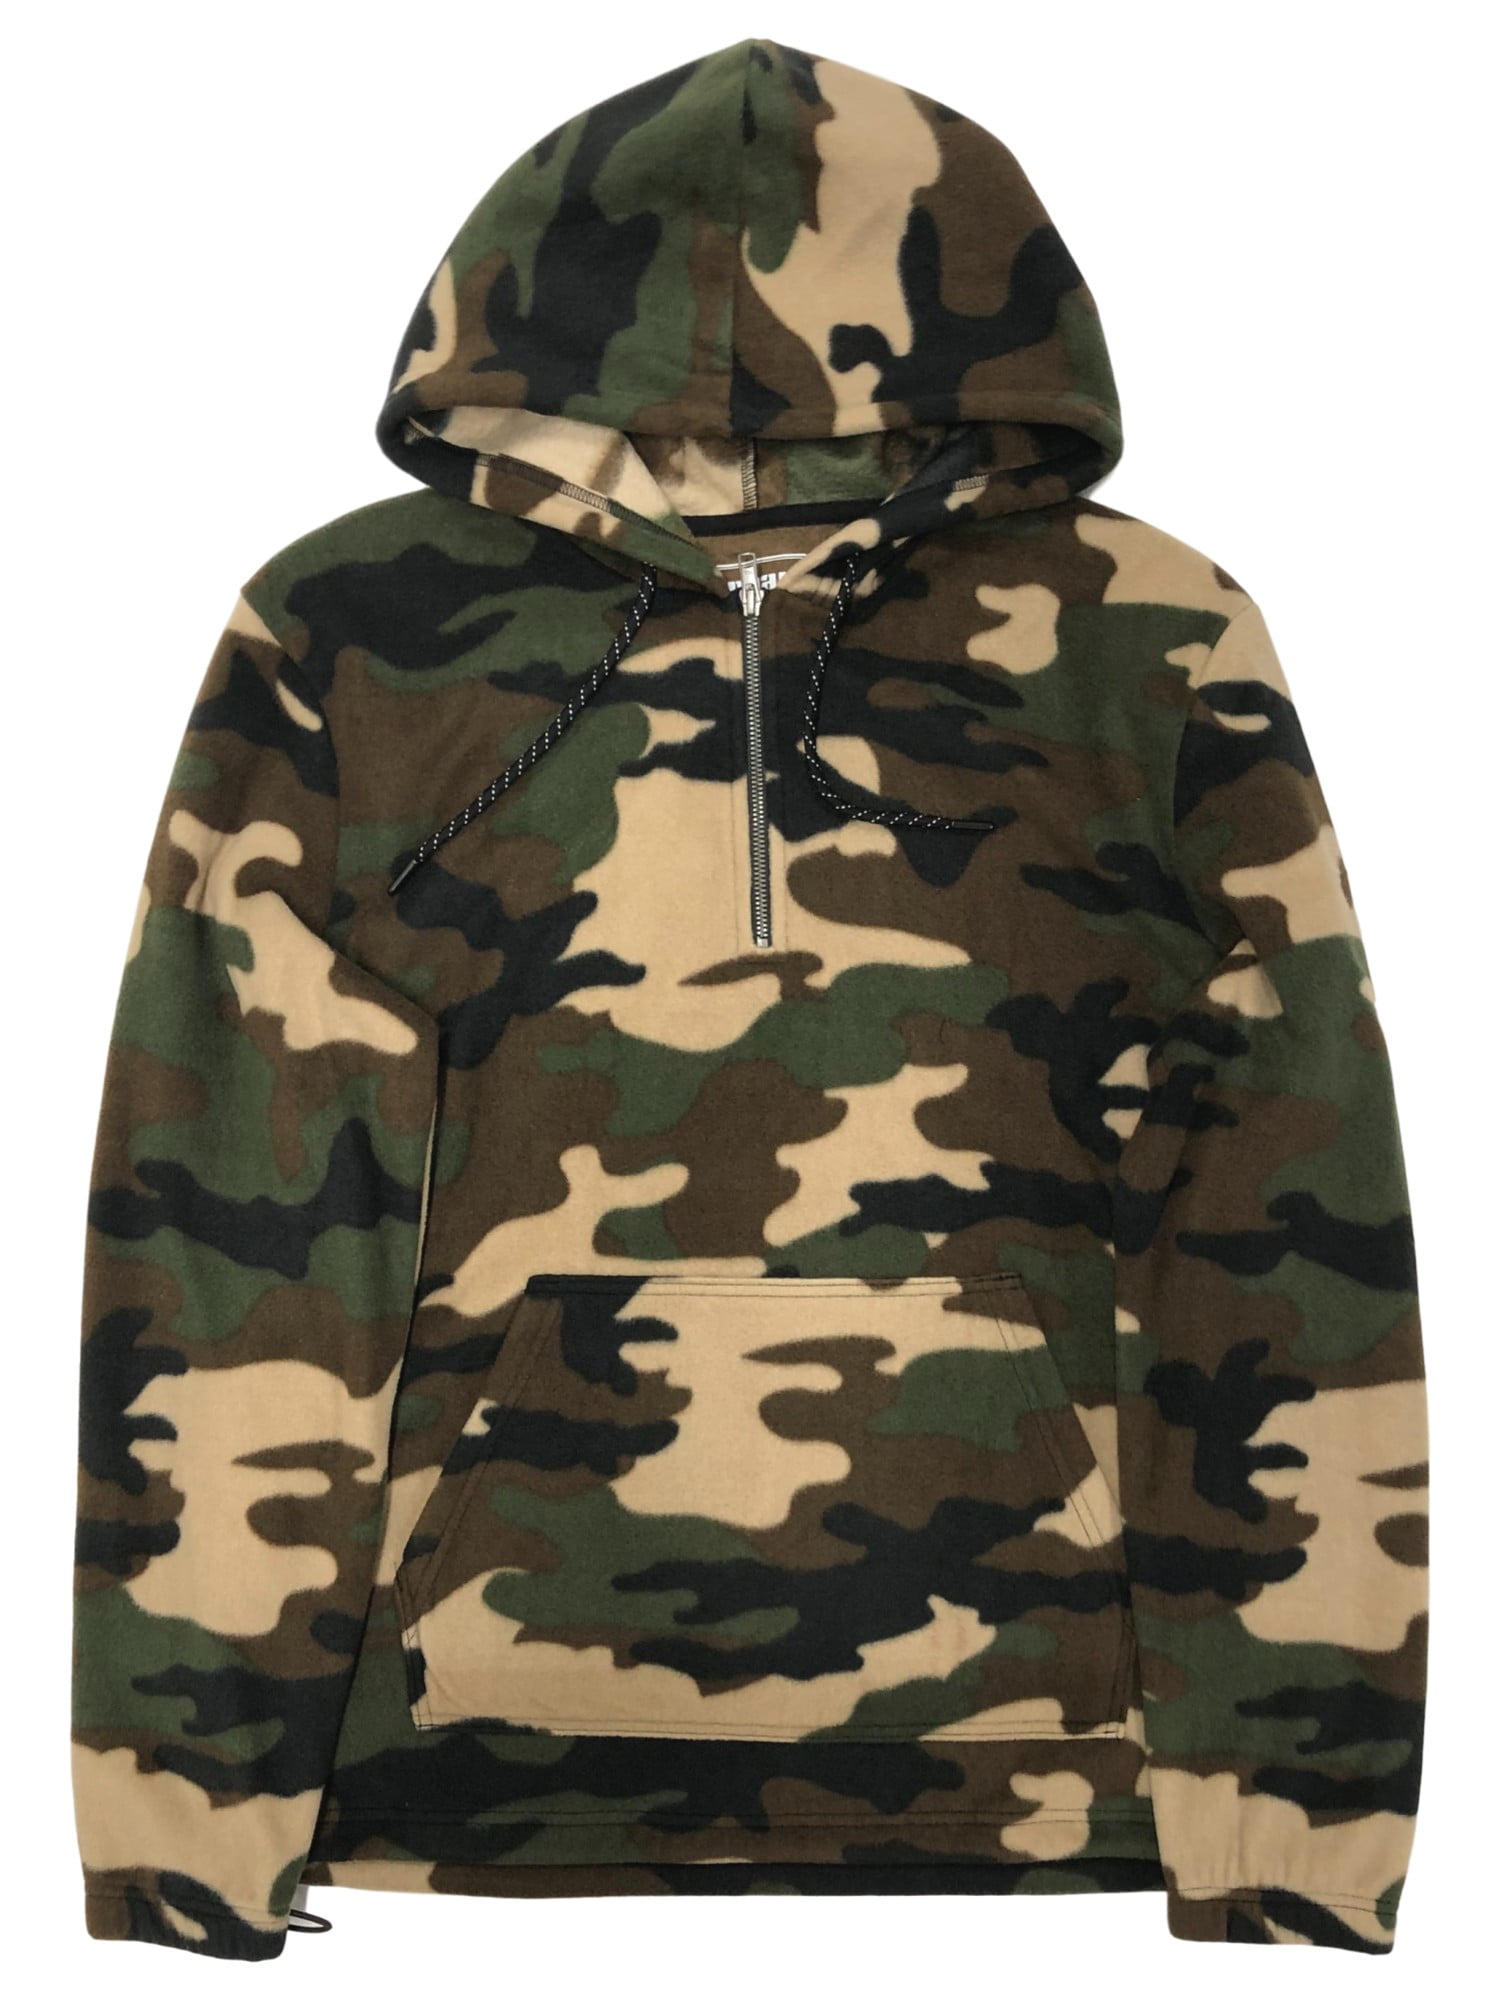 Mens Hooded Full Zip Top Hoodie Military Combat Army DPM Camo Fleece Jacket New